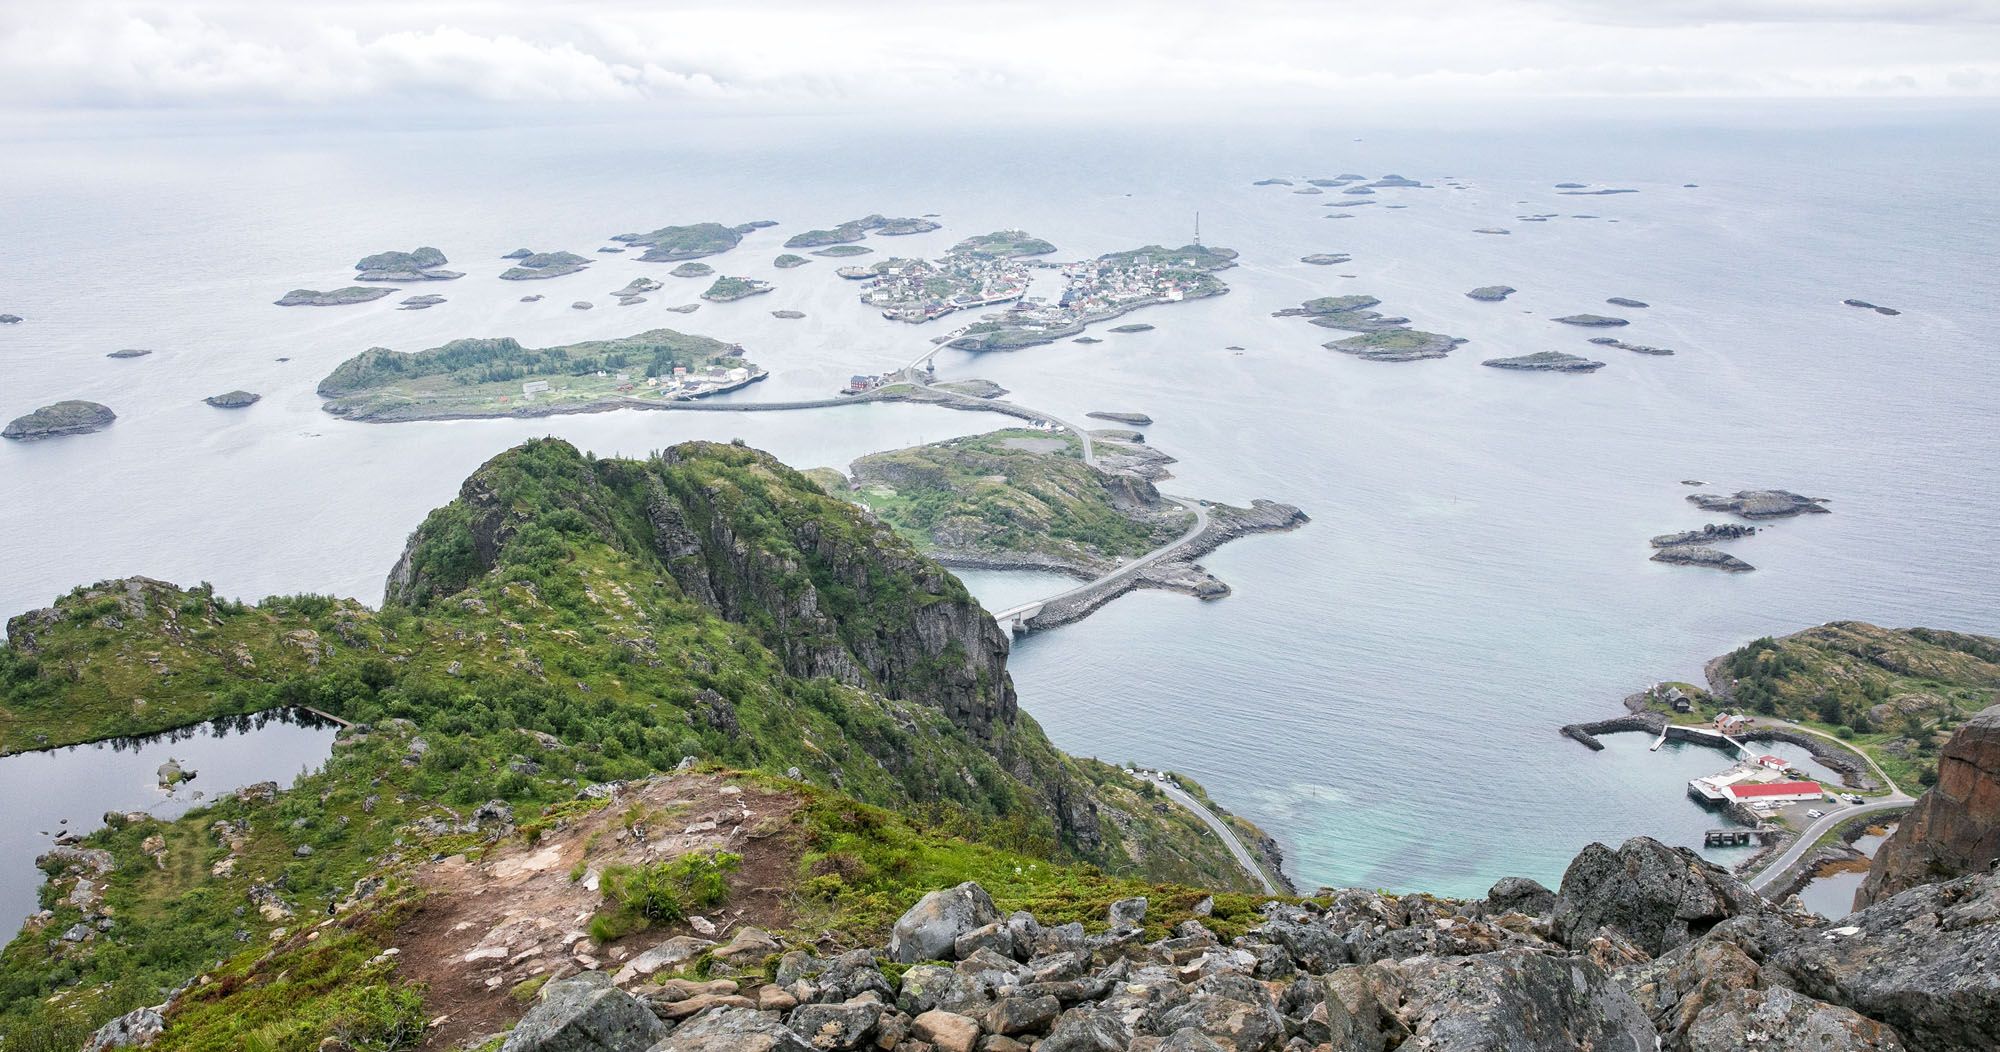 Featured image for “Hiking Festvågtind in the Lofoten Islands, Norway”